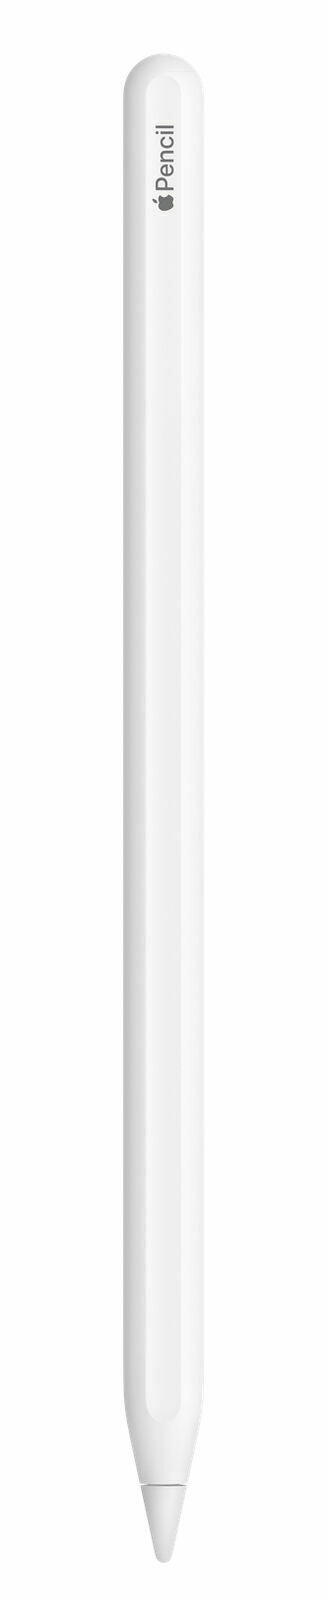 Apple Pencil Stylus 2nd Generation | iPad Pro 11/12.9-inch | MU8F2AM/A A2051| GA